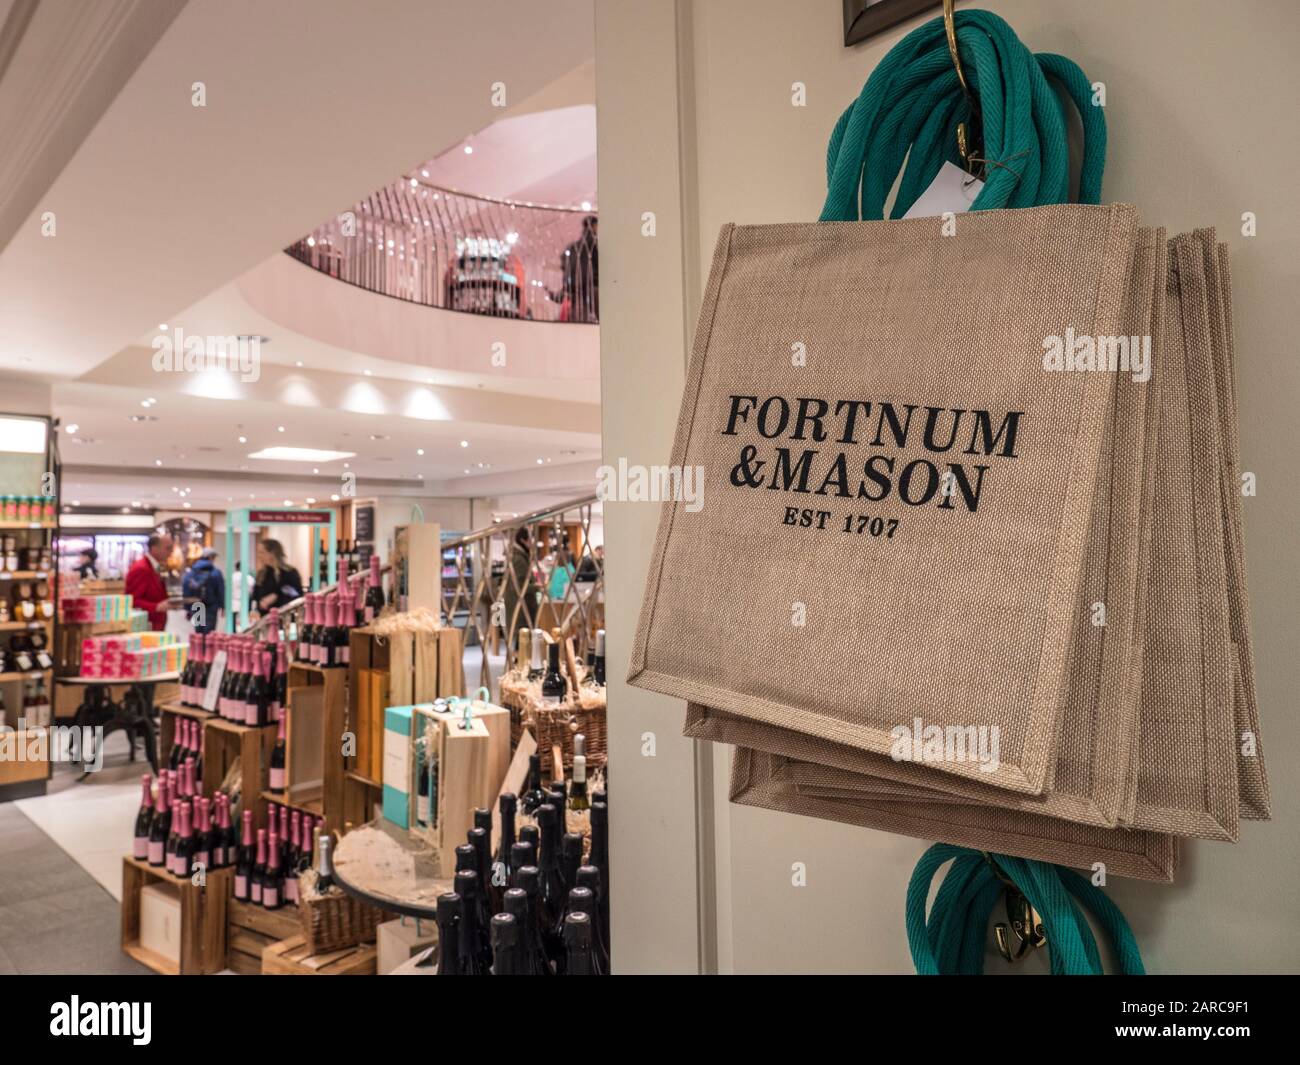 louis vuitton paper shopping bag - Bing  Luxury paper bag, Louis vuitton  gifts, Branding design packaging